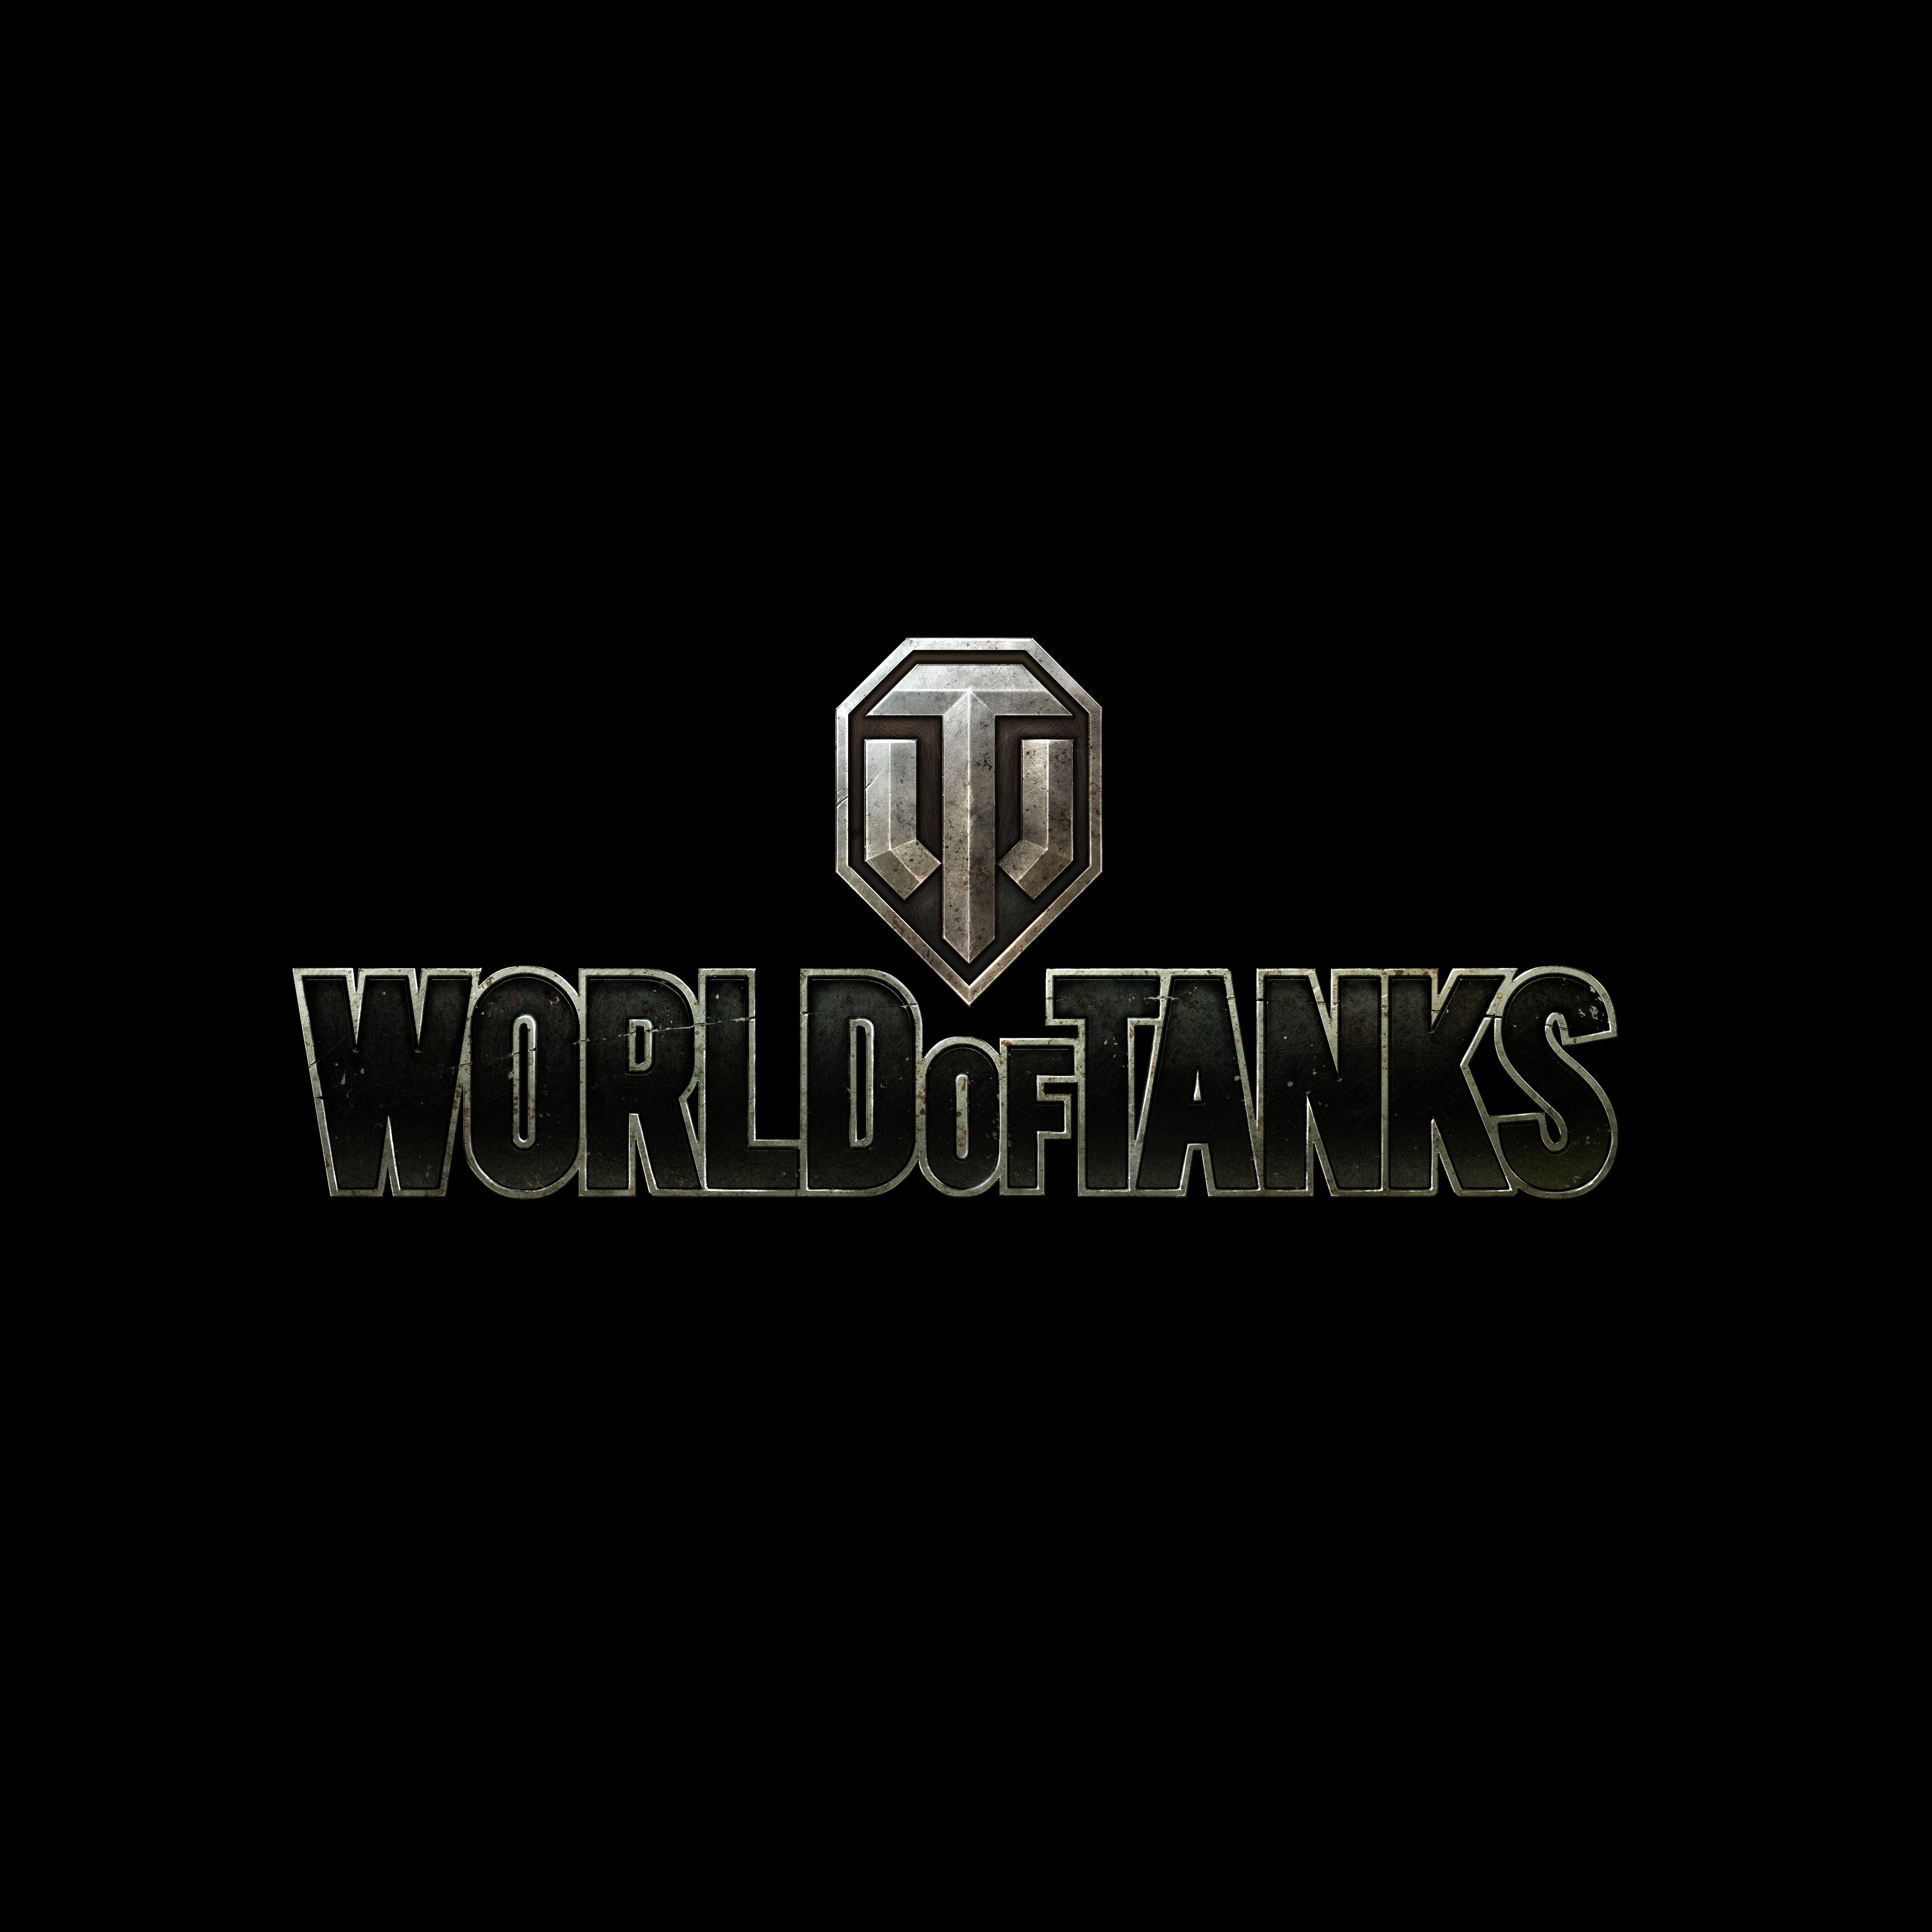 Worldoftanks exe. Значок вот. WOT лого. World of Tanks иконка. Логотип игры World of Tanks.